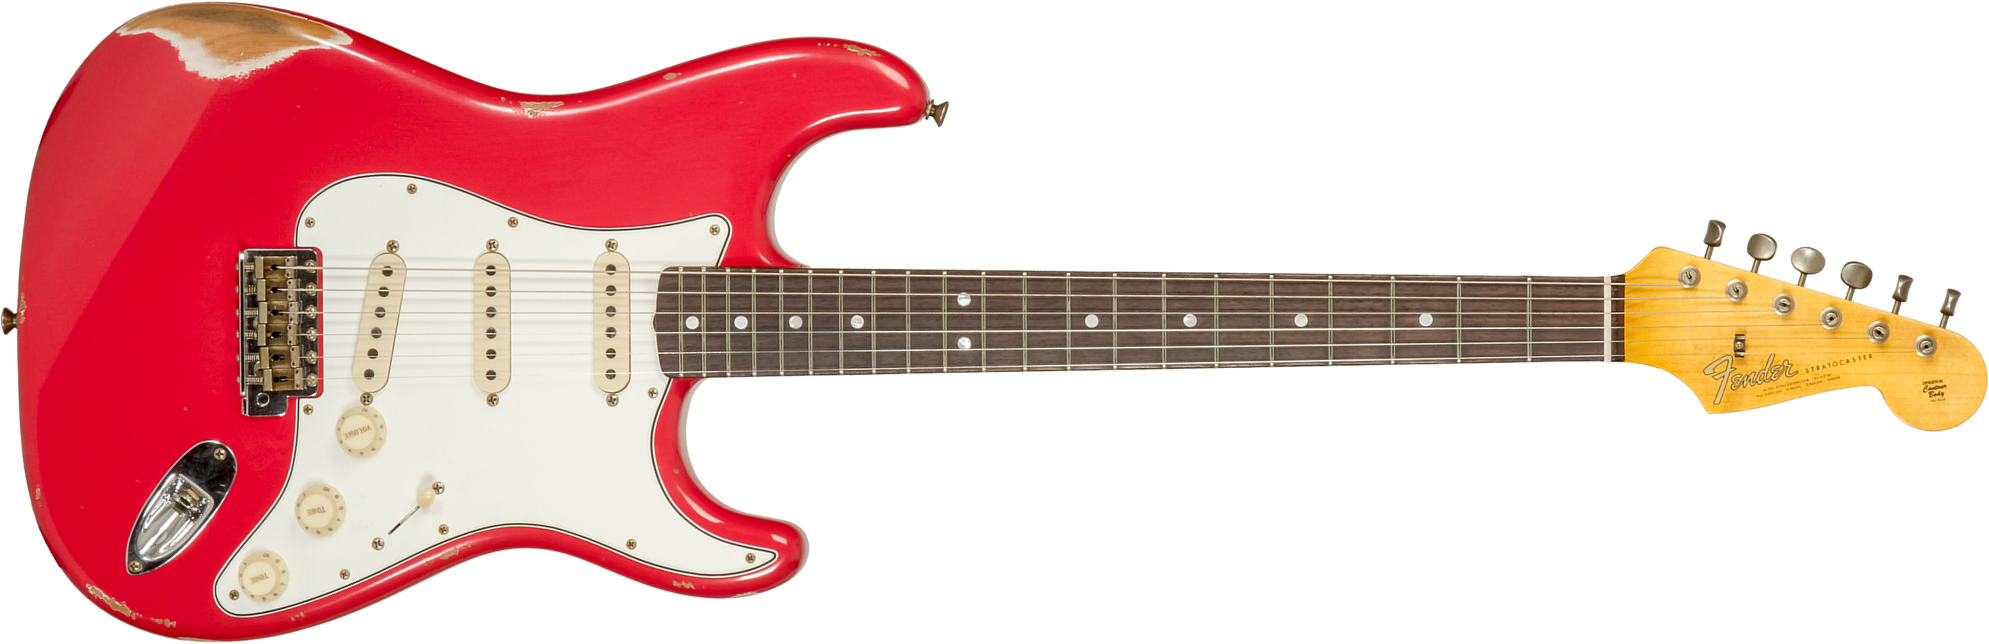 Fender Custom Shop Strat Late 1964 Trem 3s Rw #cz575557 - Relic Aged Fiesta Red - Guitare Électrique Forme Str - Main picture